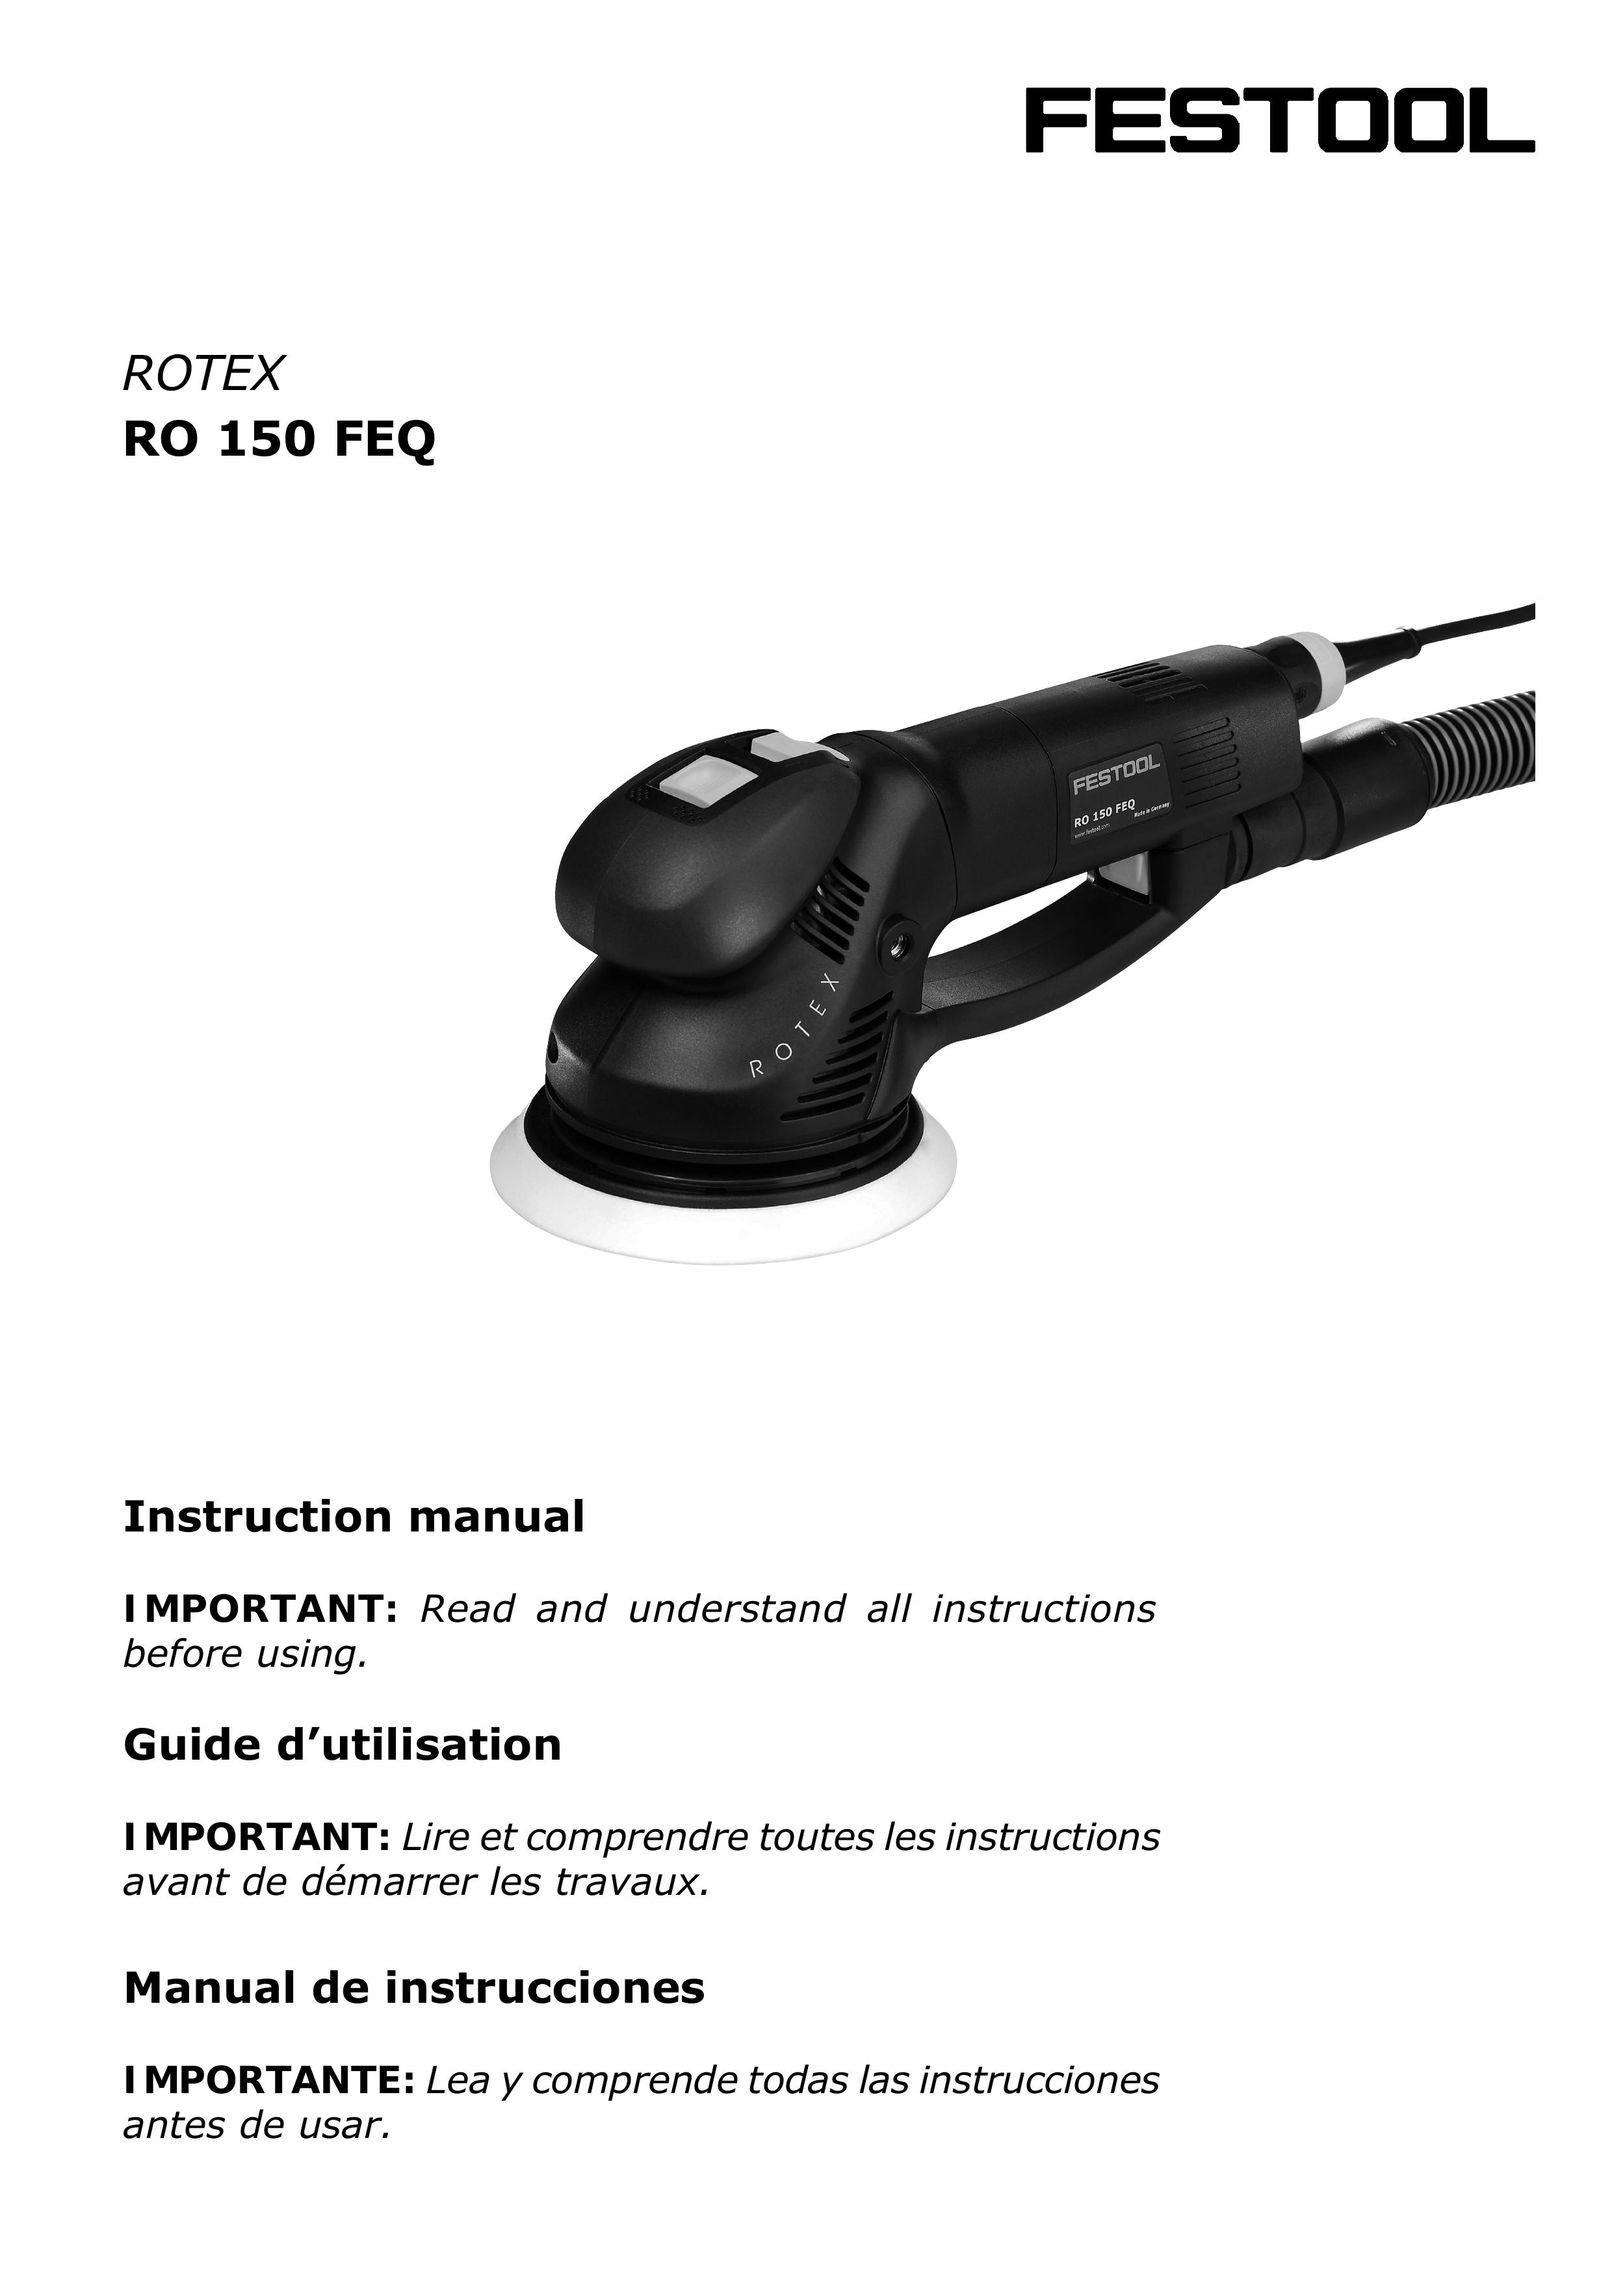 Festool RO 150 FEQ Cordless Sander User Manual